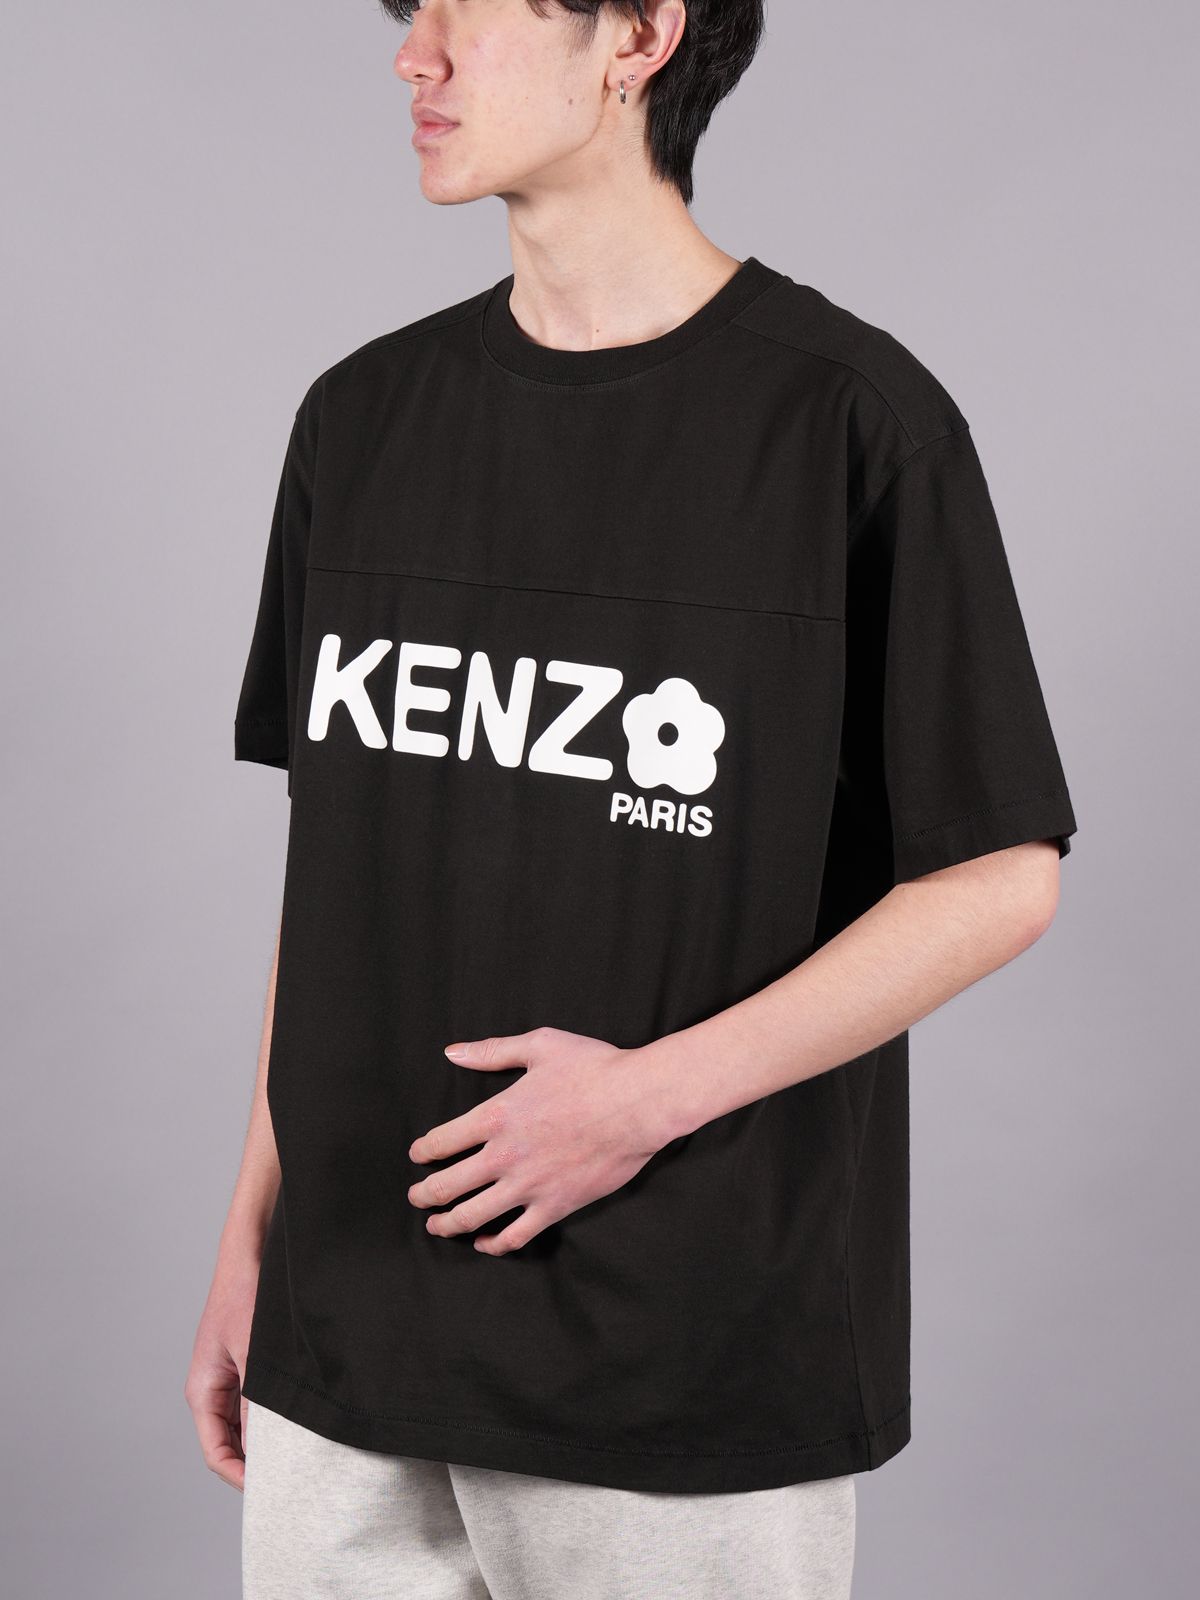 KENZO】ケンゾー BOKE FLOWER ロゴTシャツ 2TS012/ S 免税店直販 icqn.de